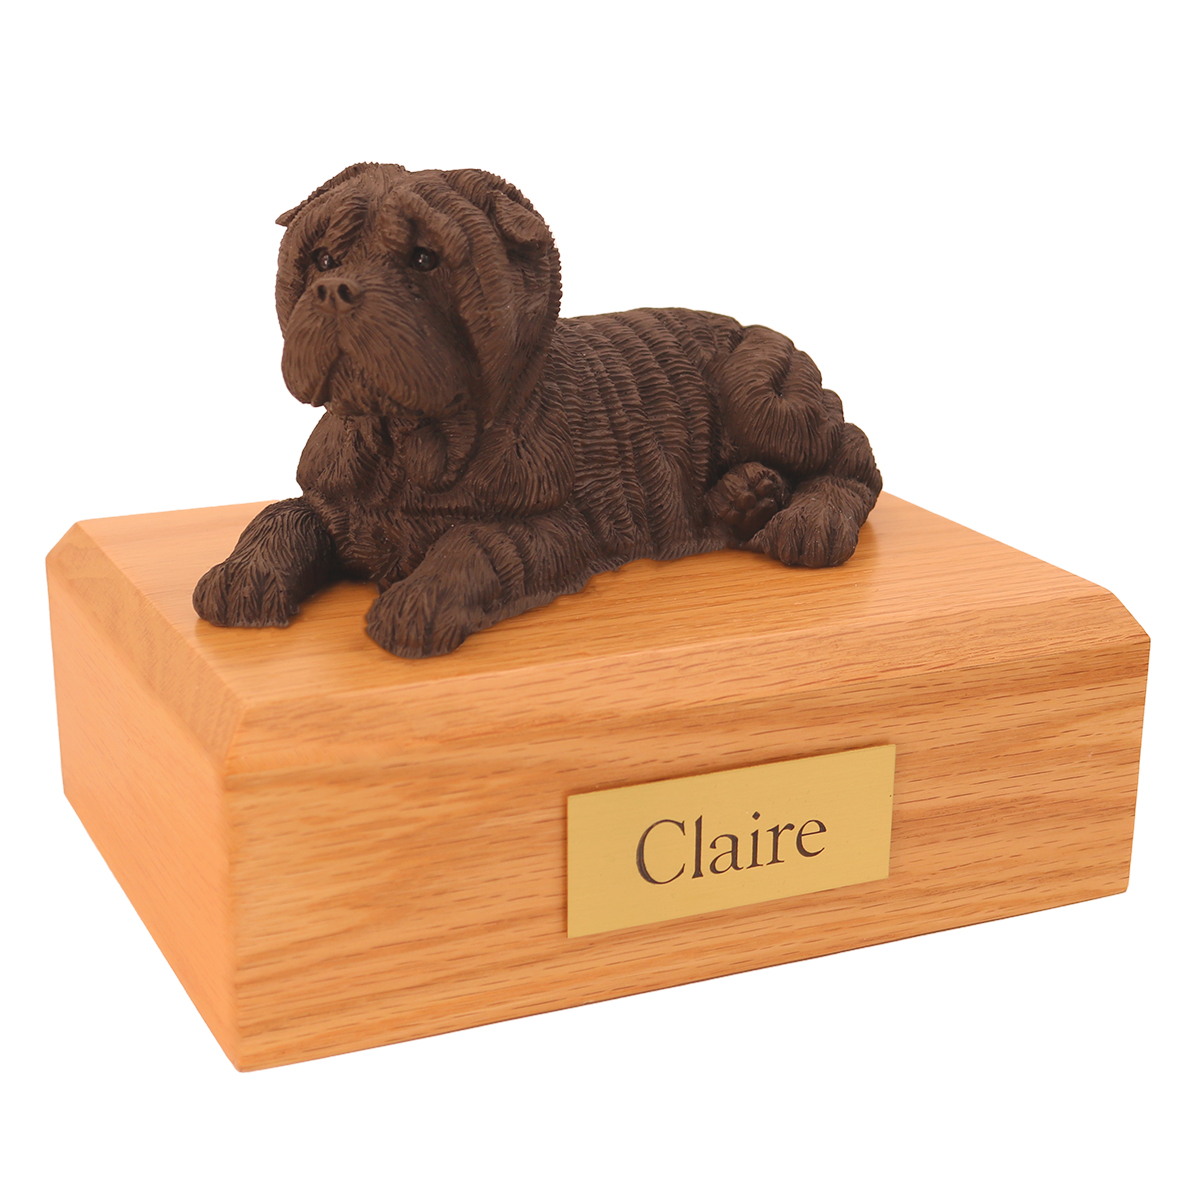 Dog, Shar Pei, Chocolate - Figurine Urn